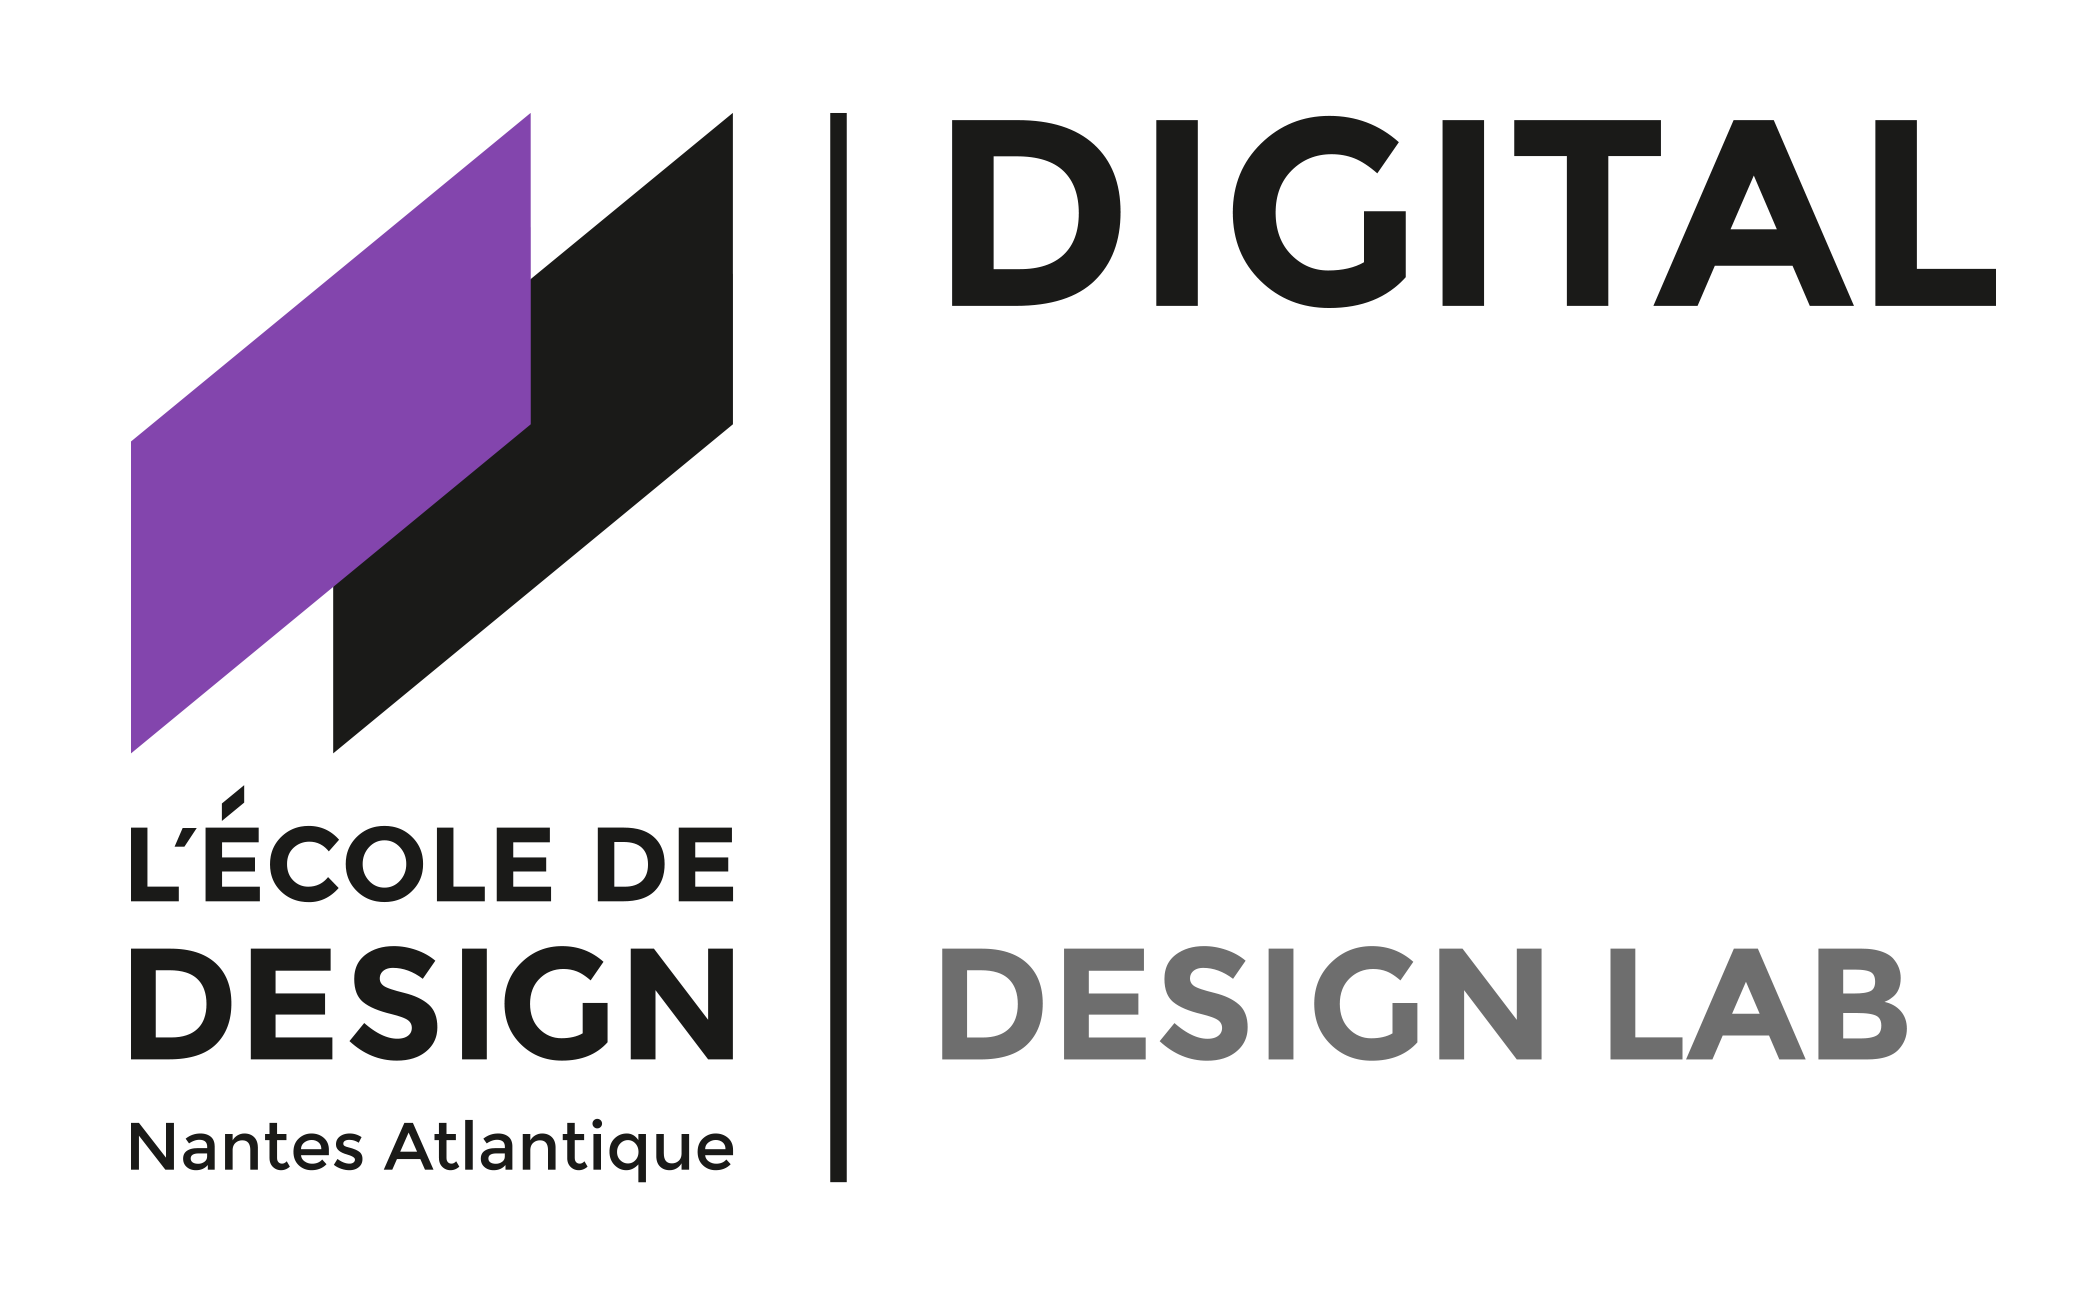 L'École de Design Nantes Atlantic Digital Design Lab Logo